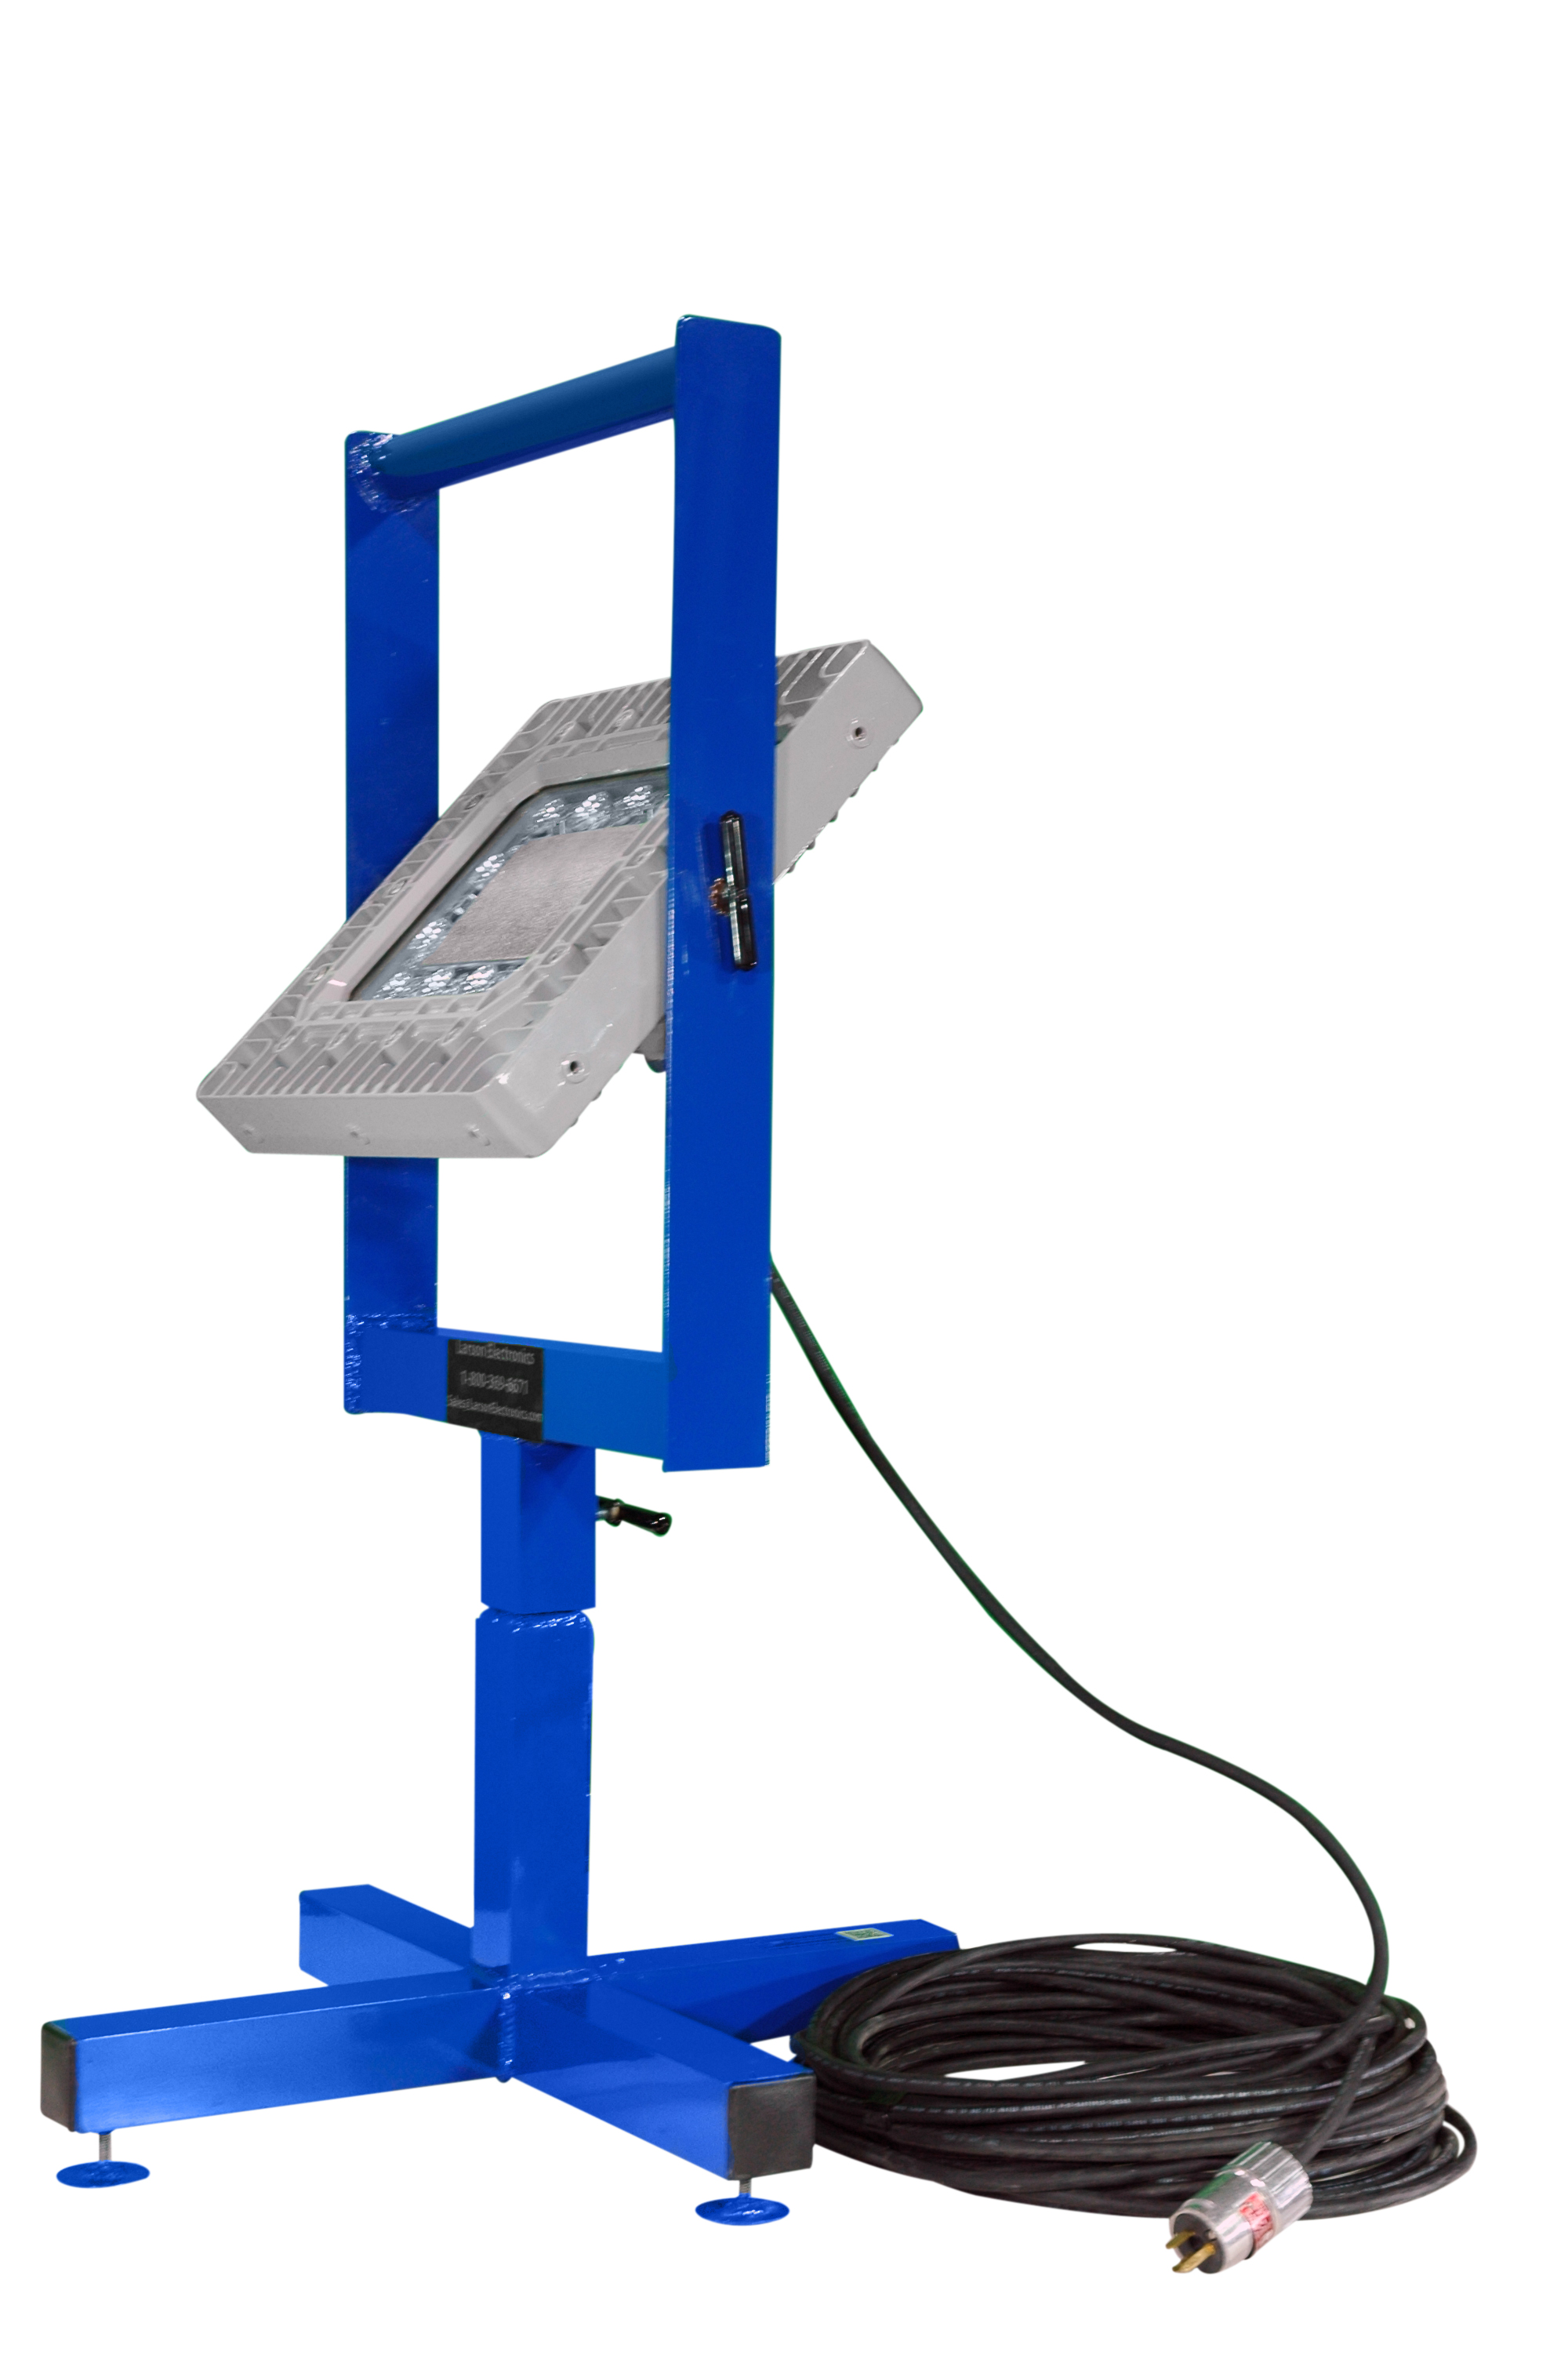 Adjustable 150 Watt Explosion Proof LED Work Light Mounted to Aluminum Base Stand